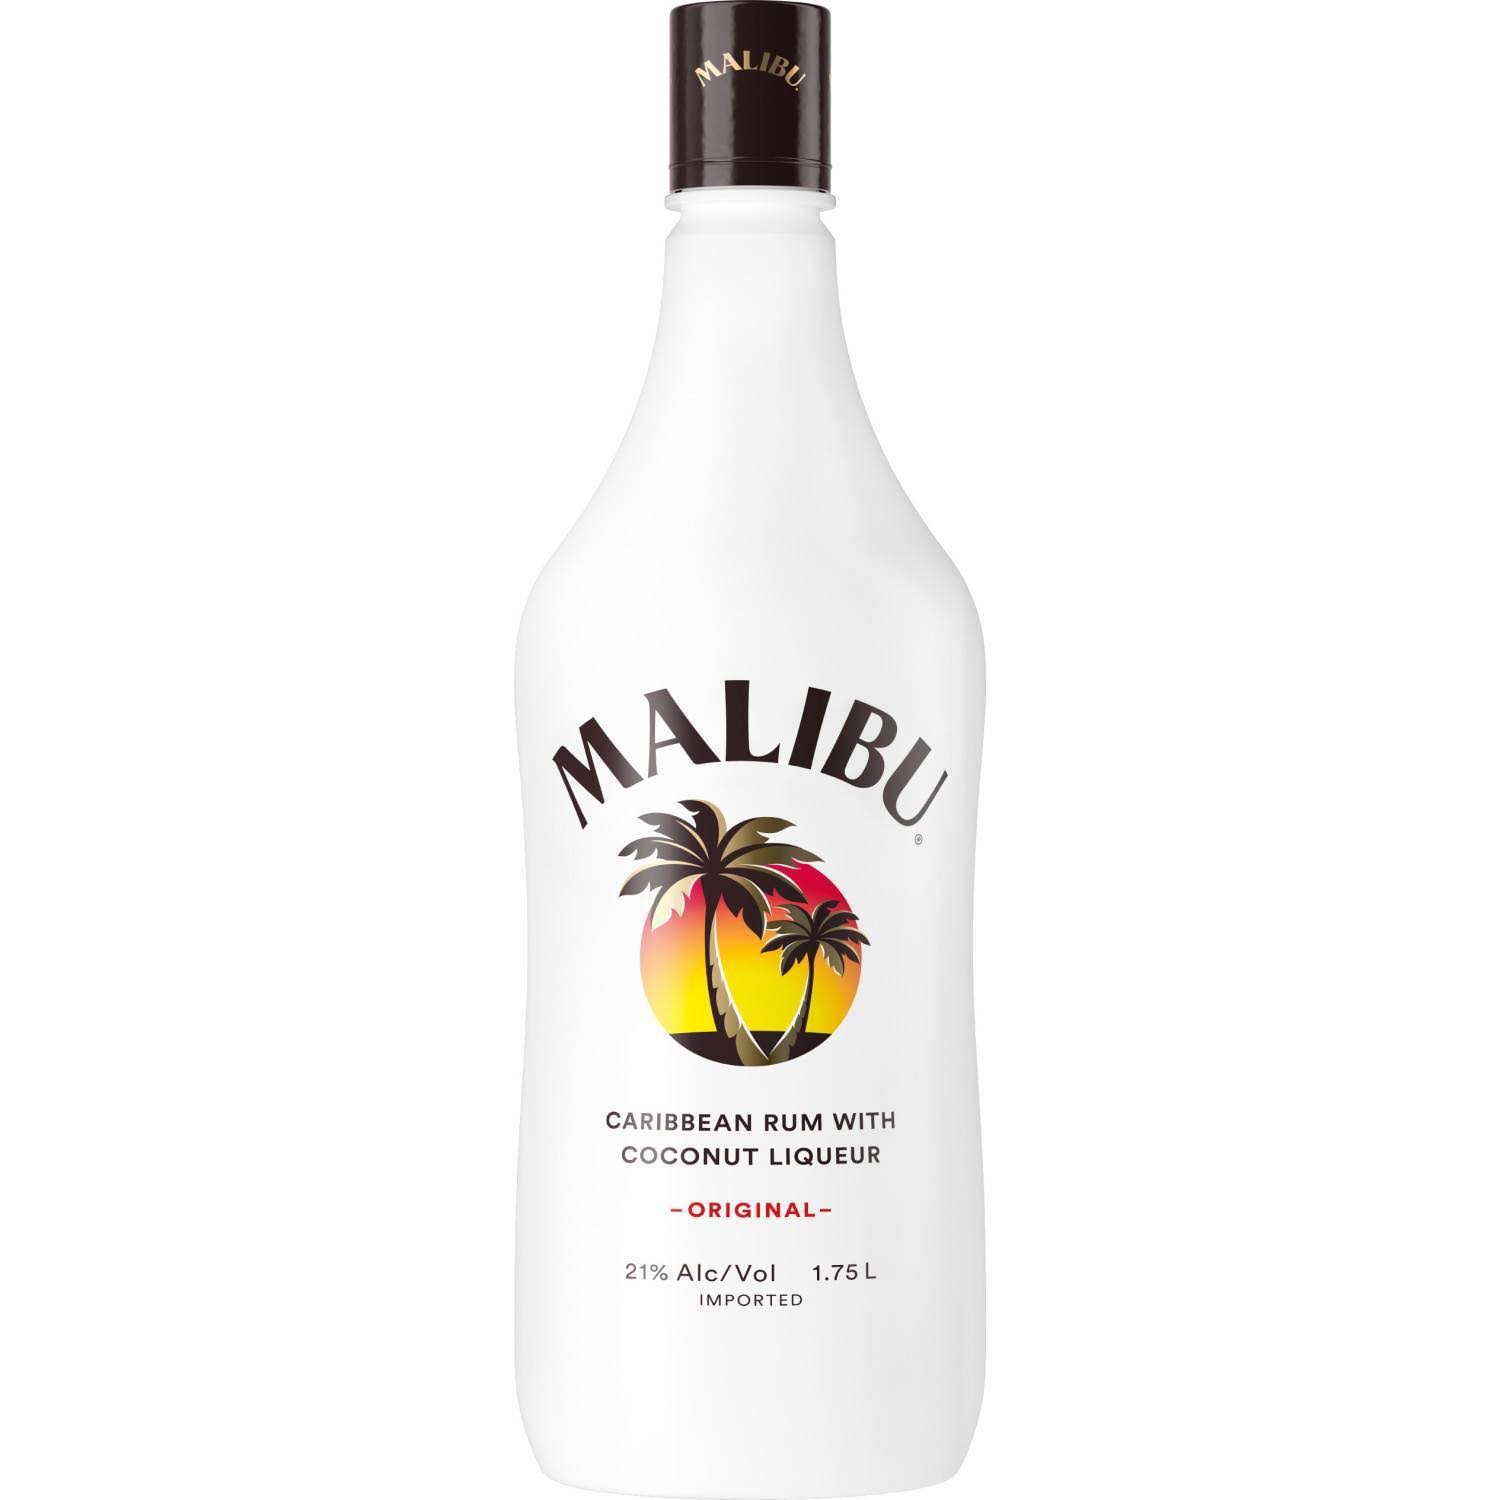 Malibu Caribbean Rum - Coconut